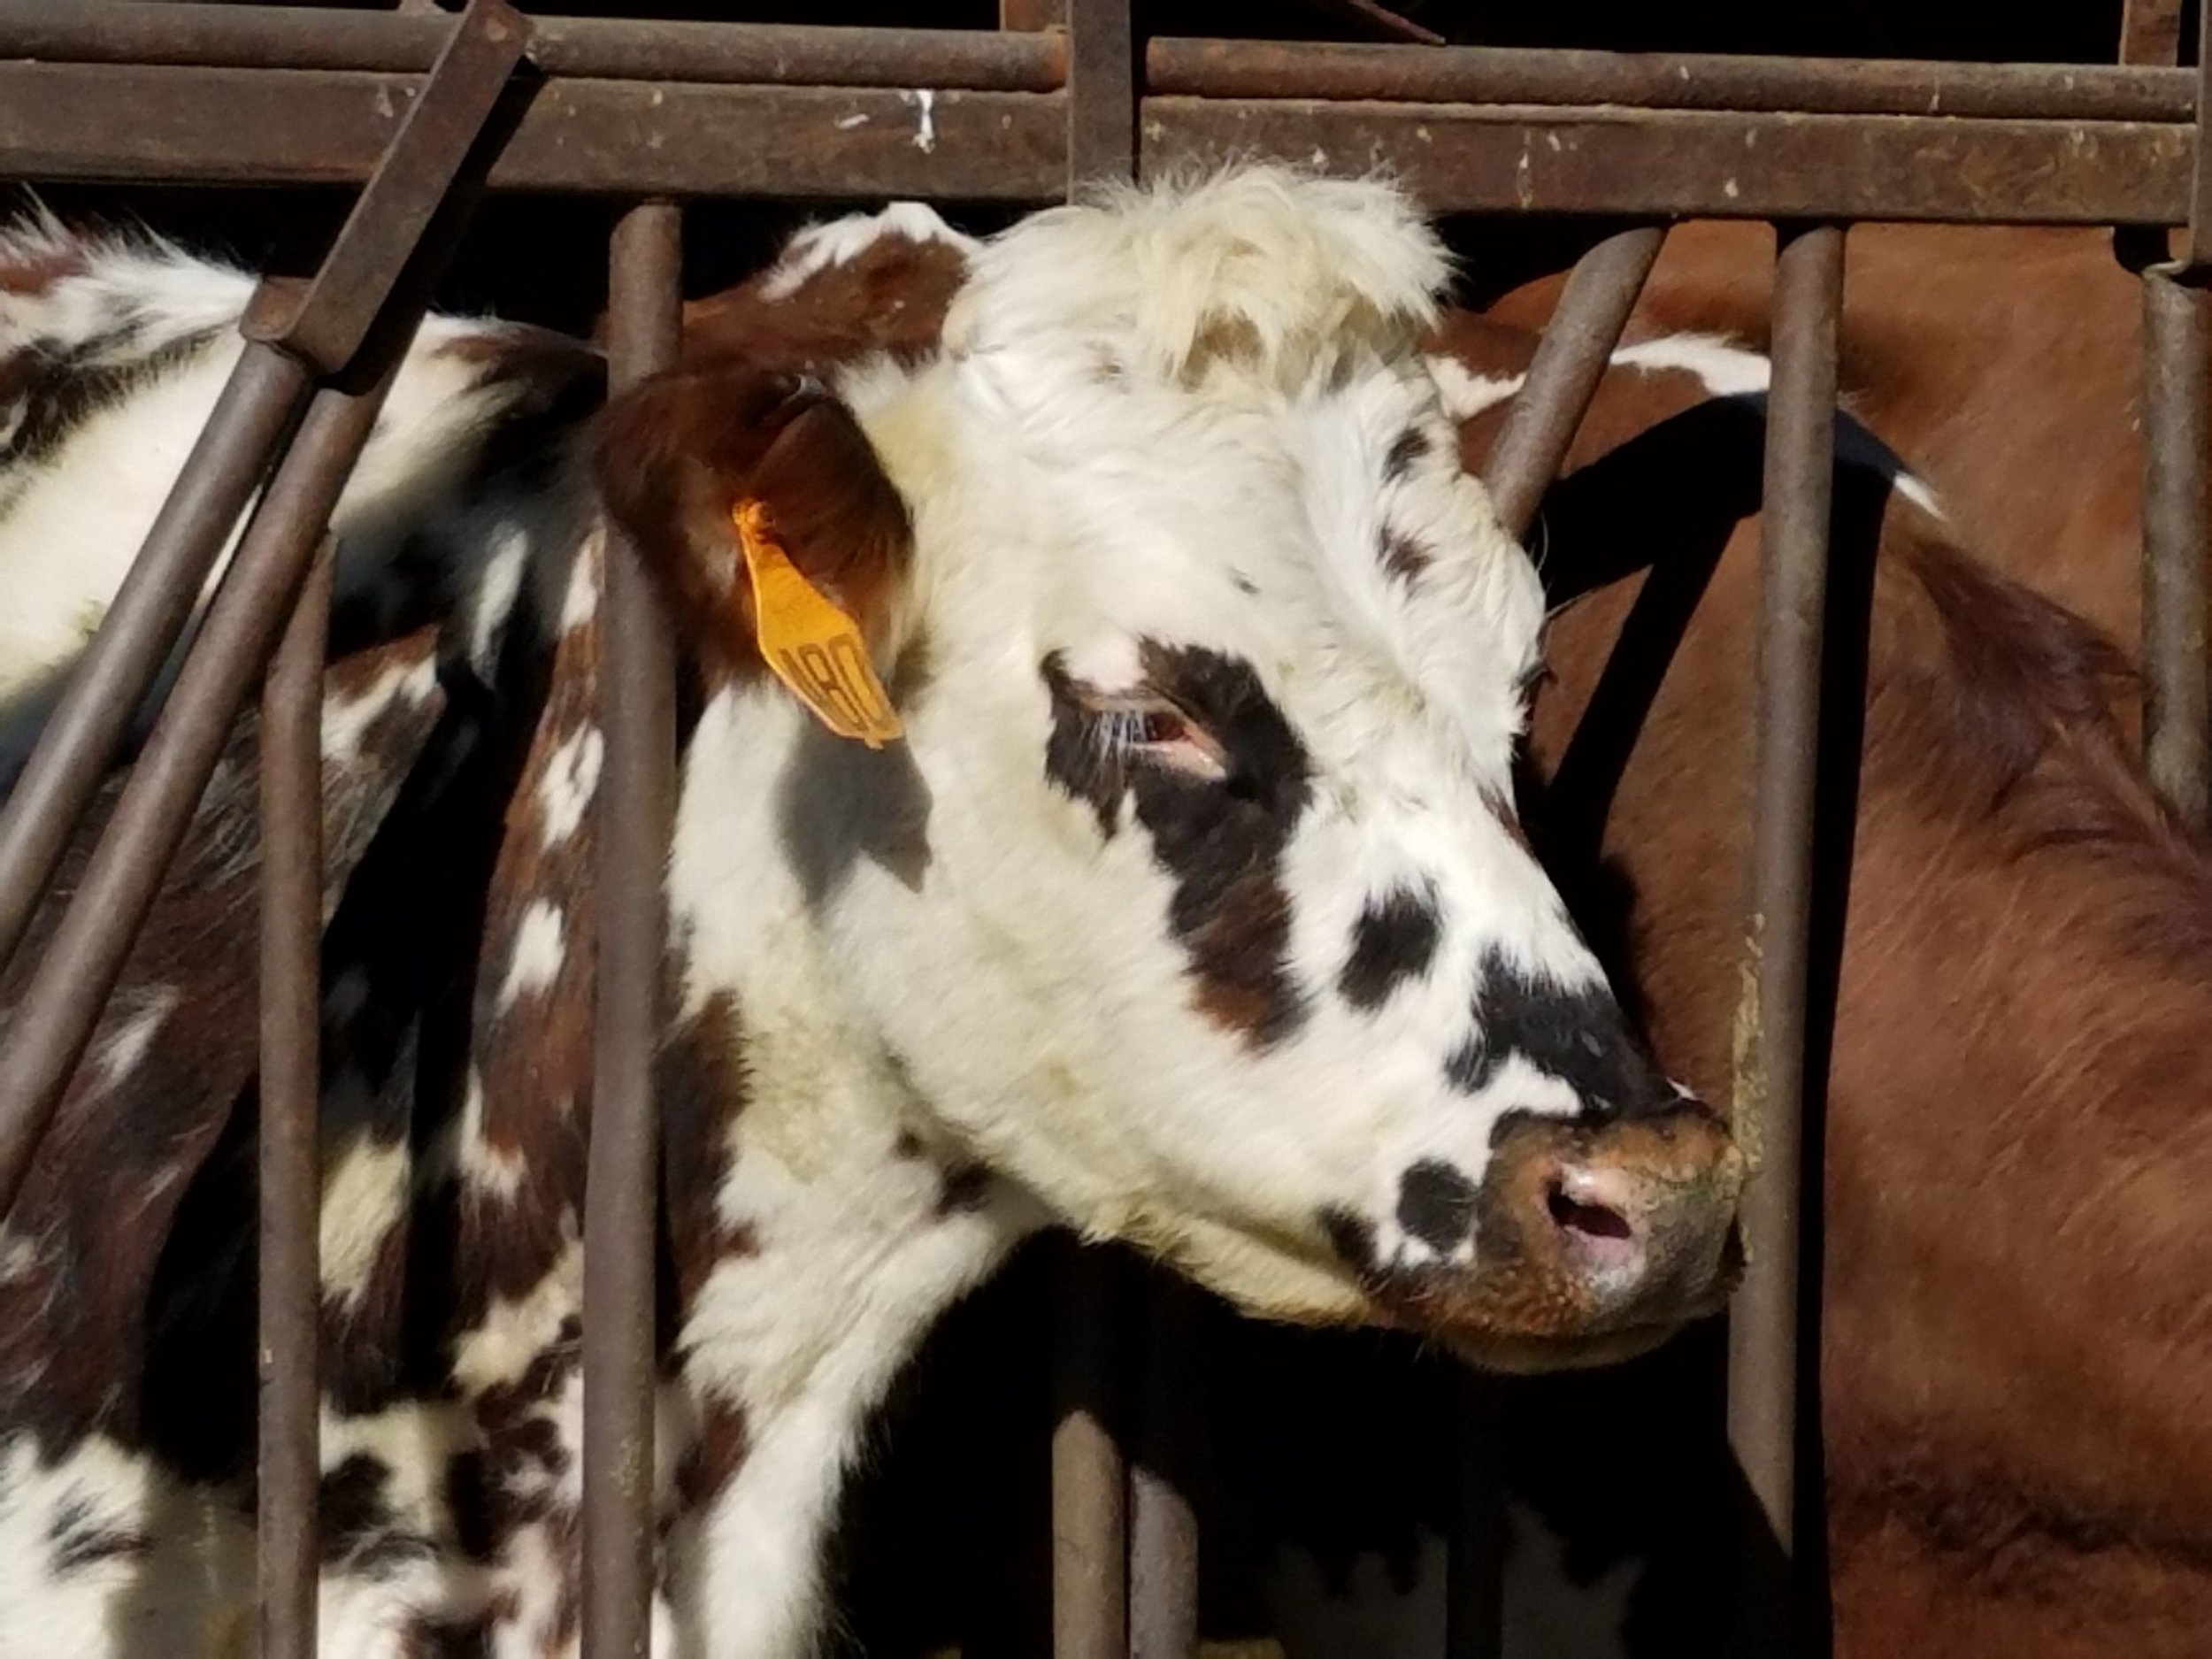 Dreamy Ayrshire cow